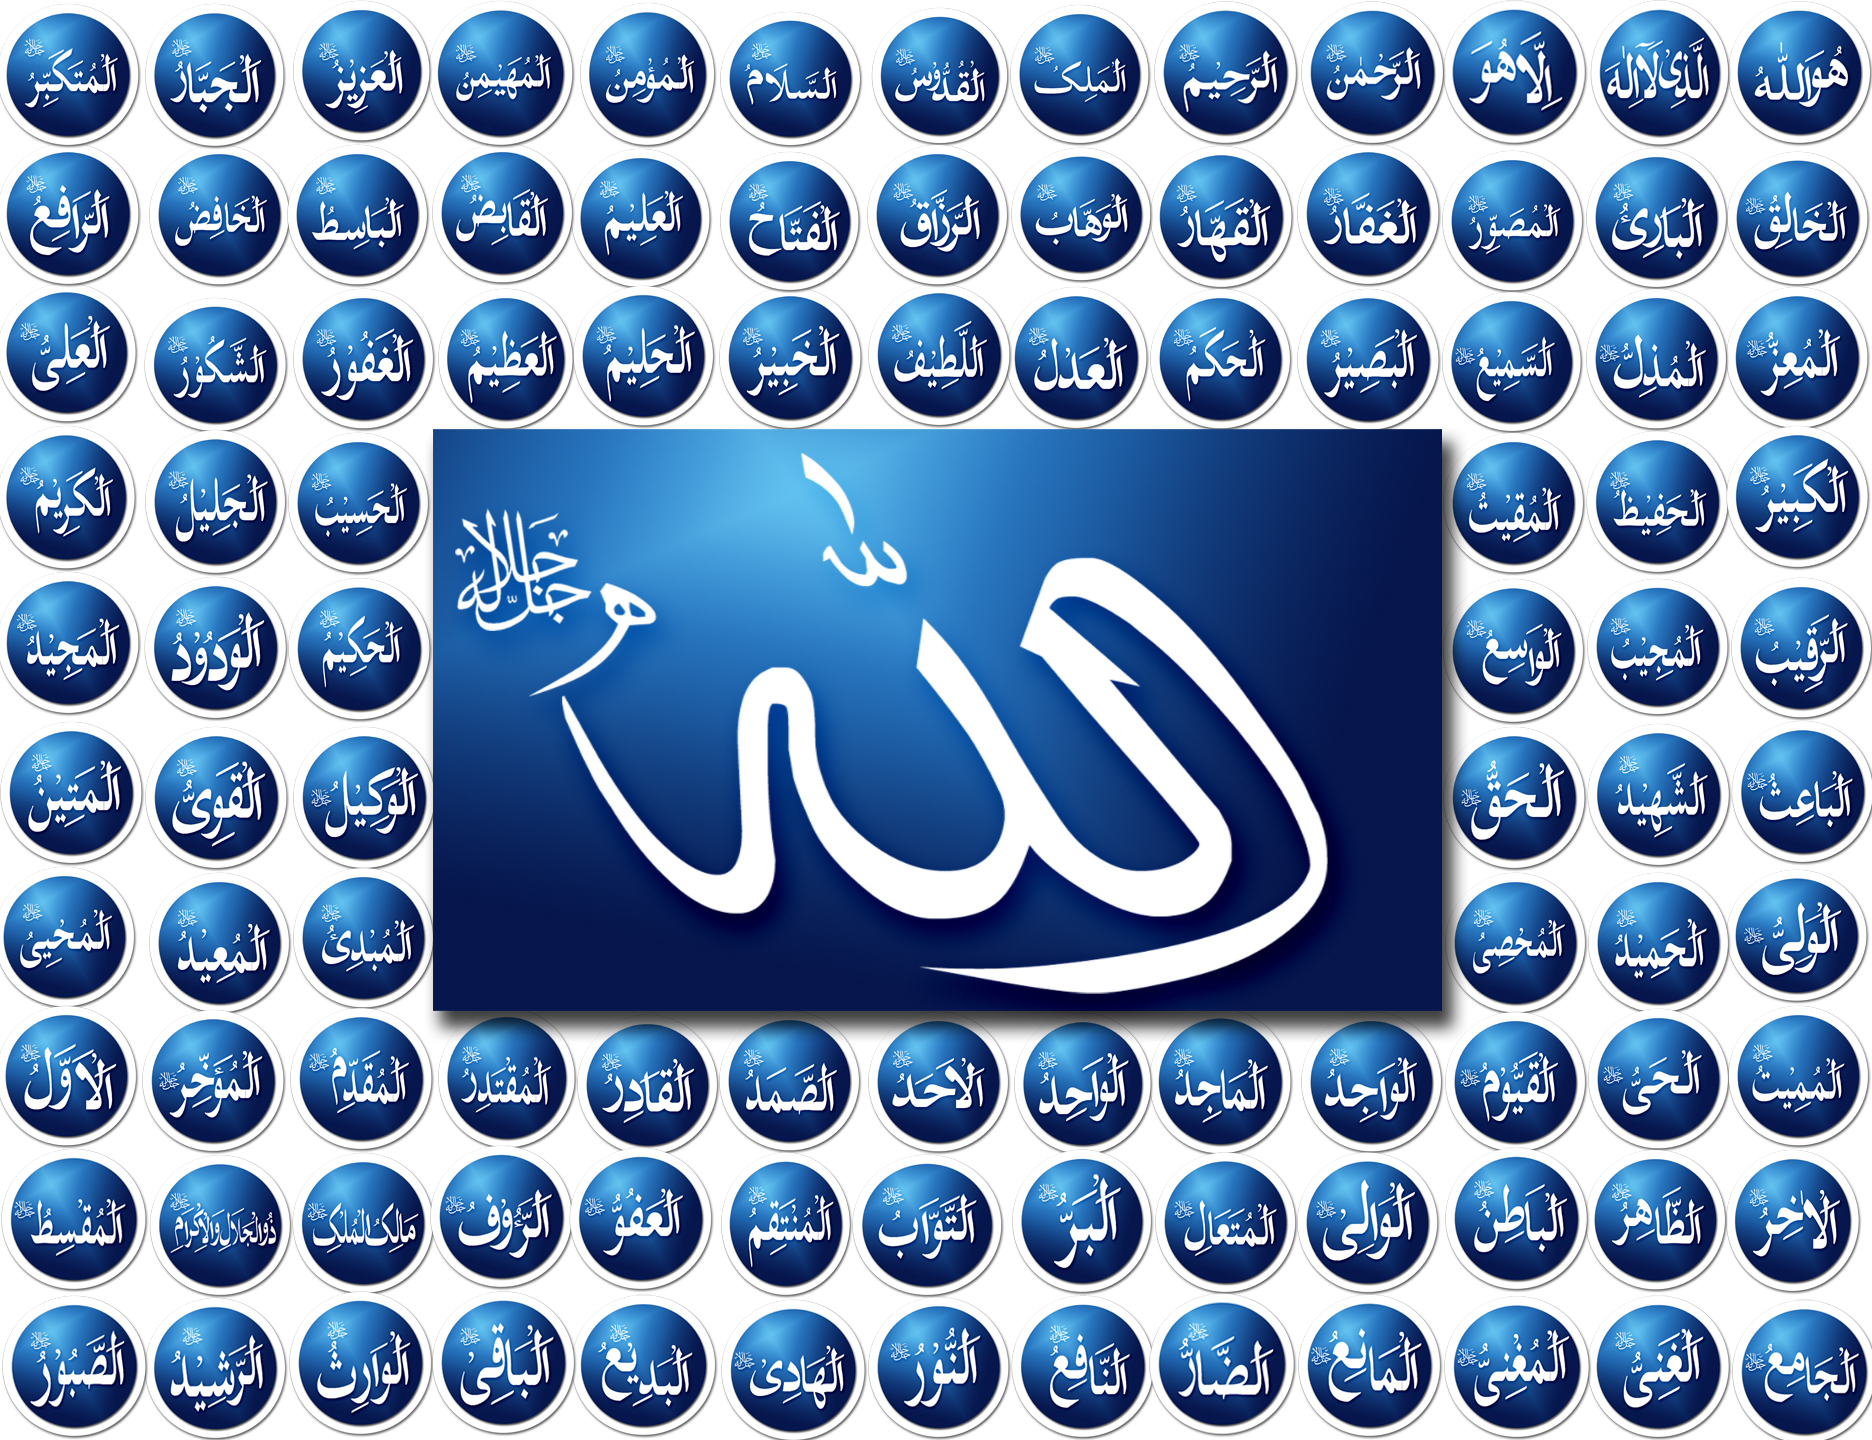 99 names of ALLAH one Wallpaper free for desktop hd